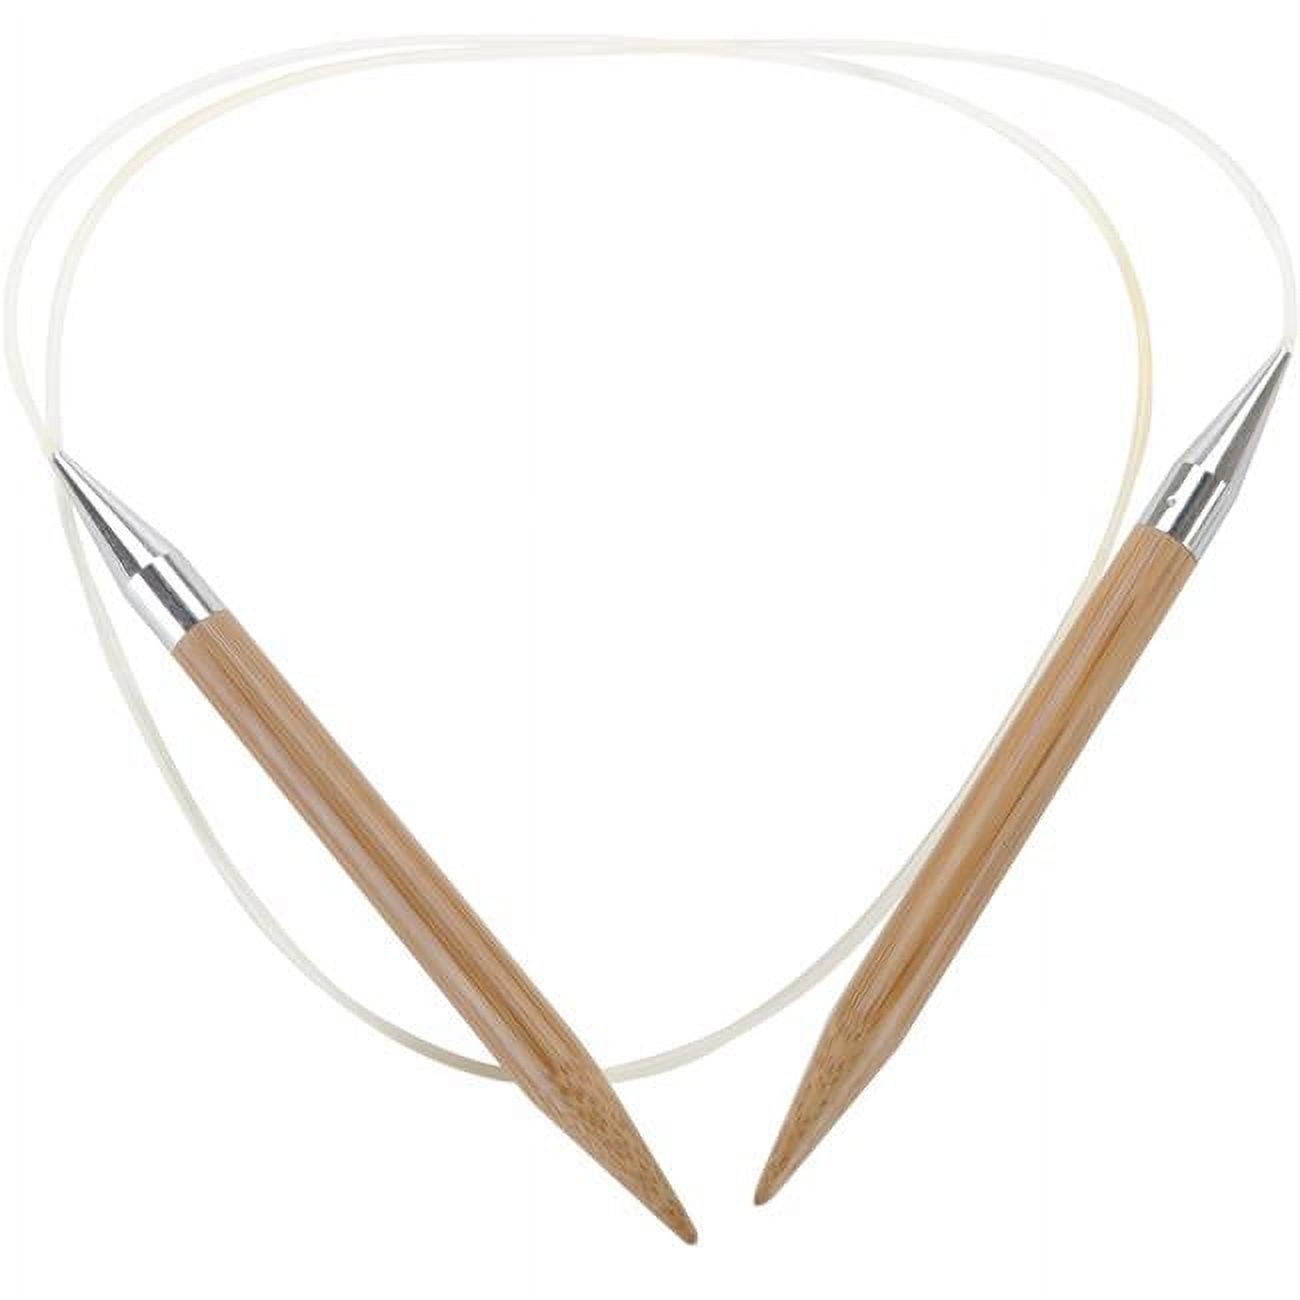 ChiaoGoo 2040-8 40 in. Bamboo Circular Knitting Needles - Size 8-5